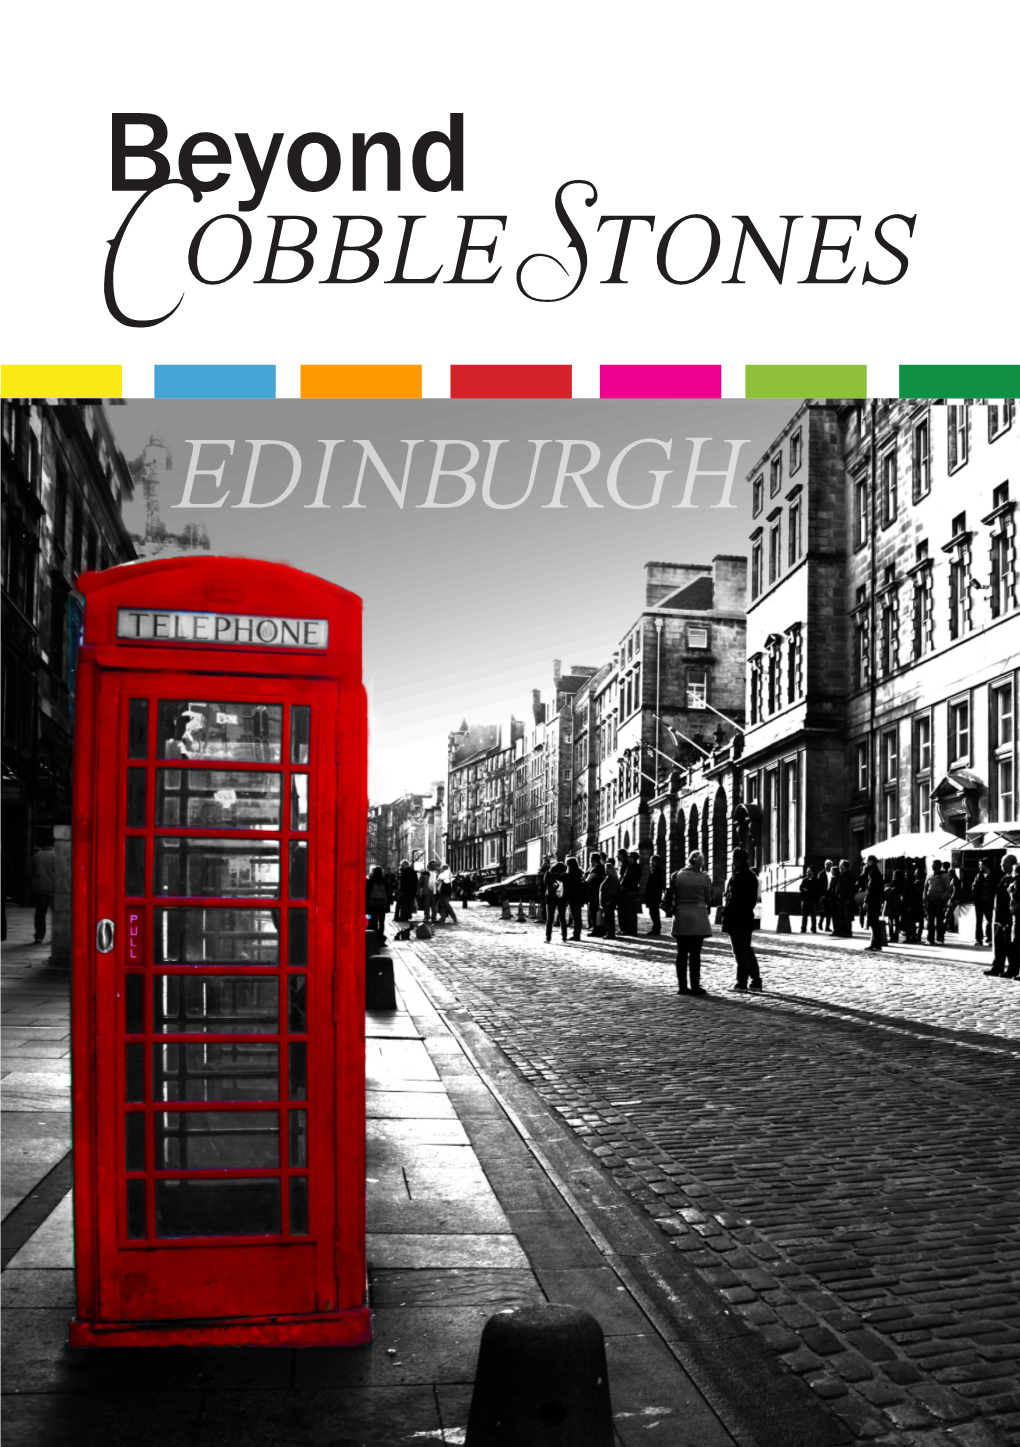 Beyond Cobble Stones Edinburgh Editorial “Beyond Cobblestones“